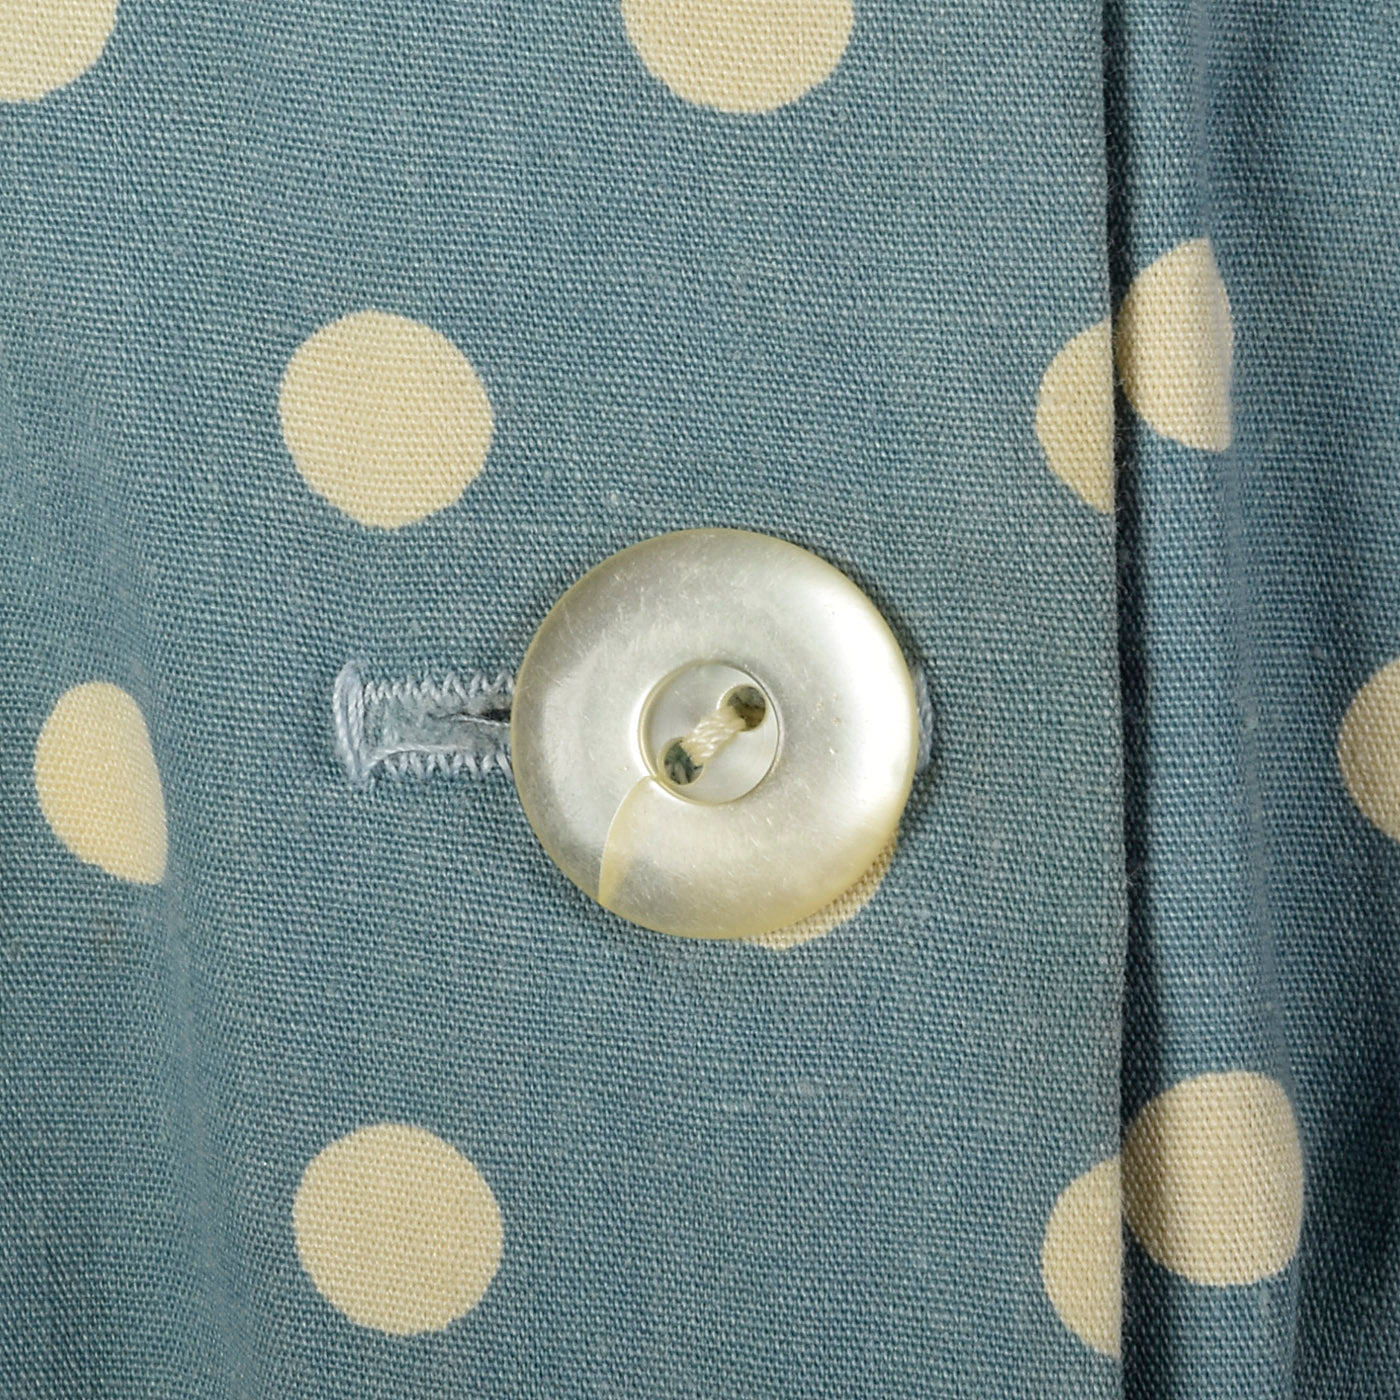 1950s Blue Polka Dot Day Dress